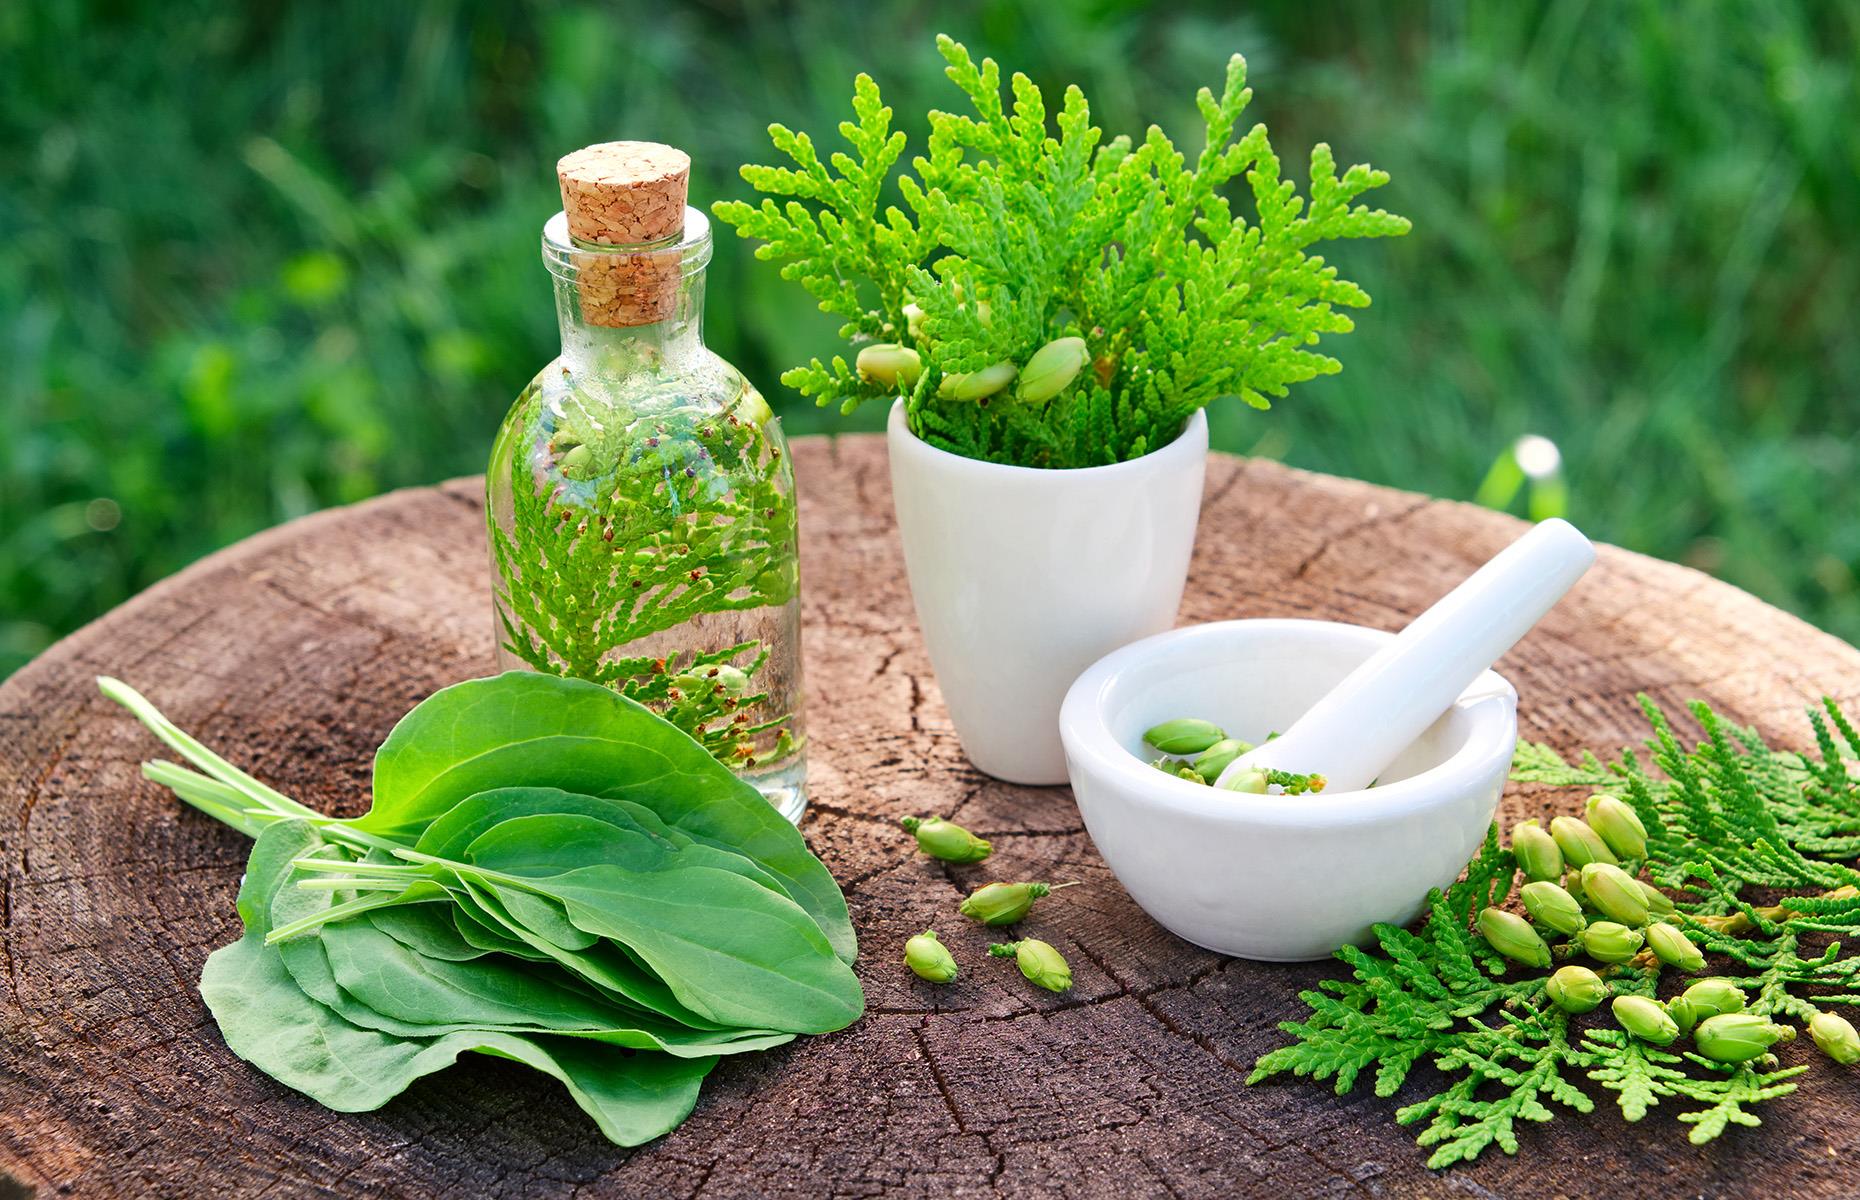 Modern medicine or herbal health?